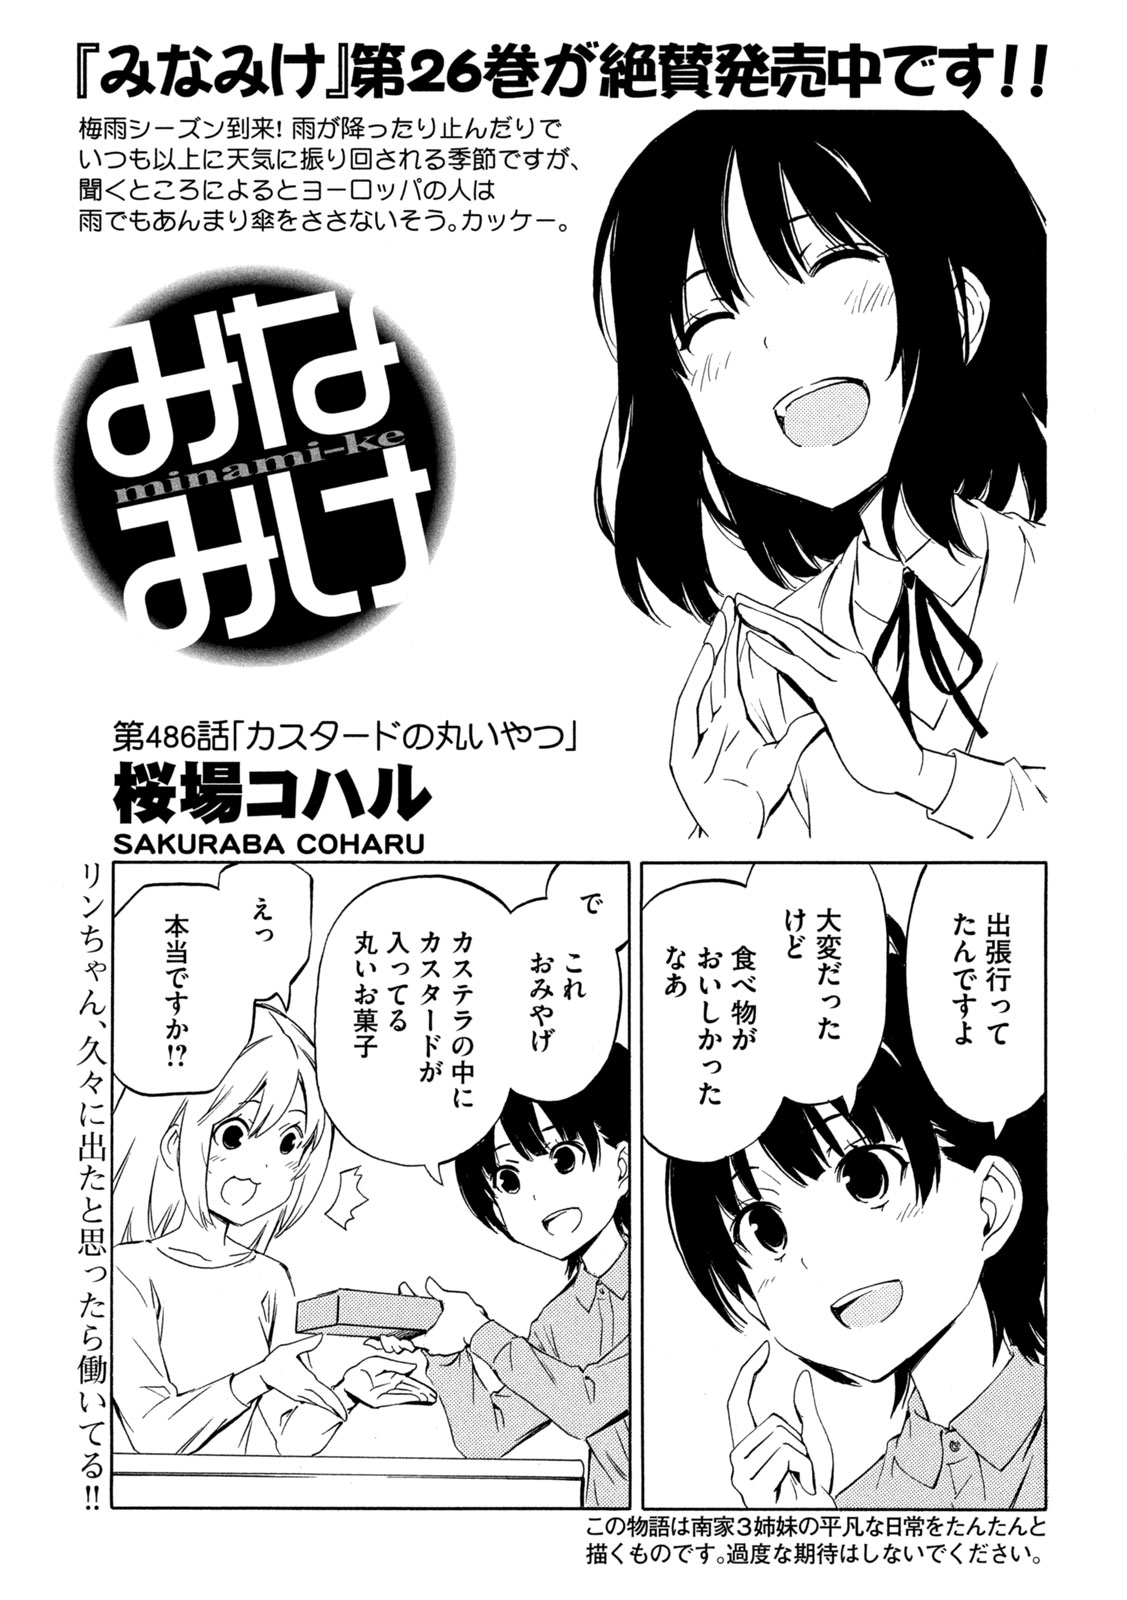 Minami-ke - Chapter 486 - Page 1